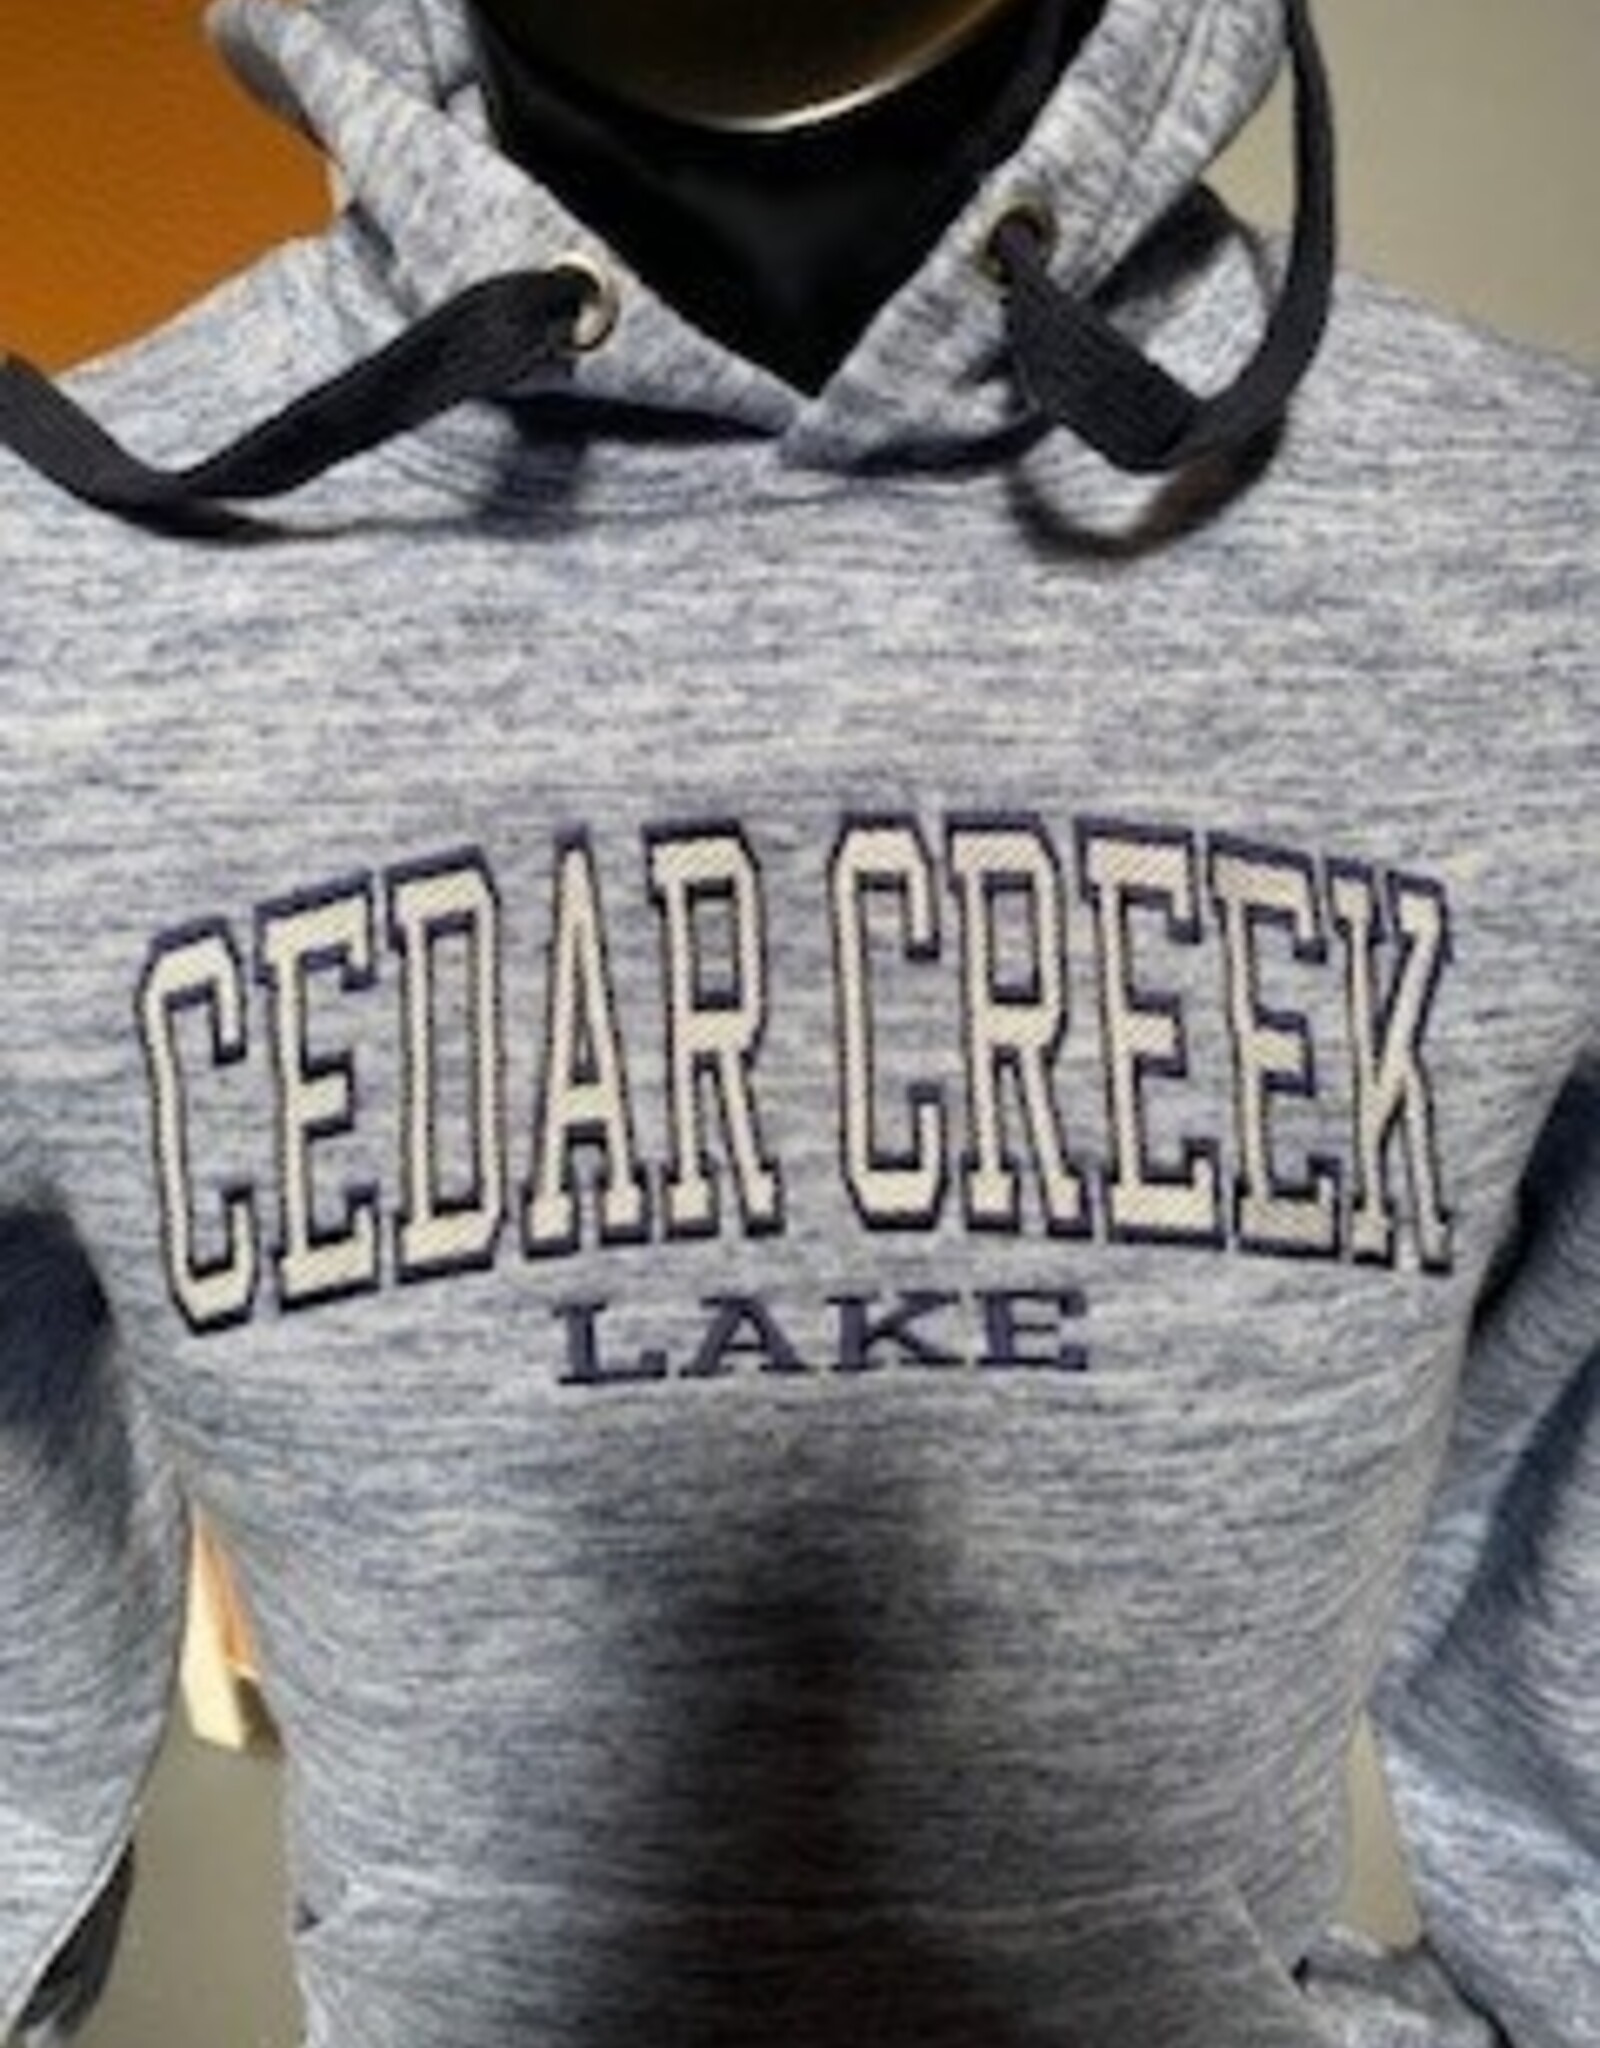 Exist Sports Hooded Sweatshirt-Cedar Creek Lake